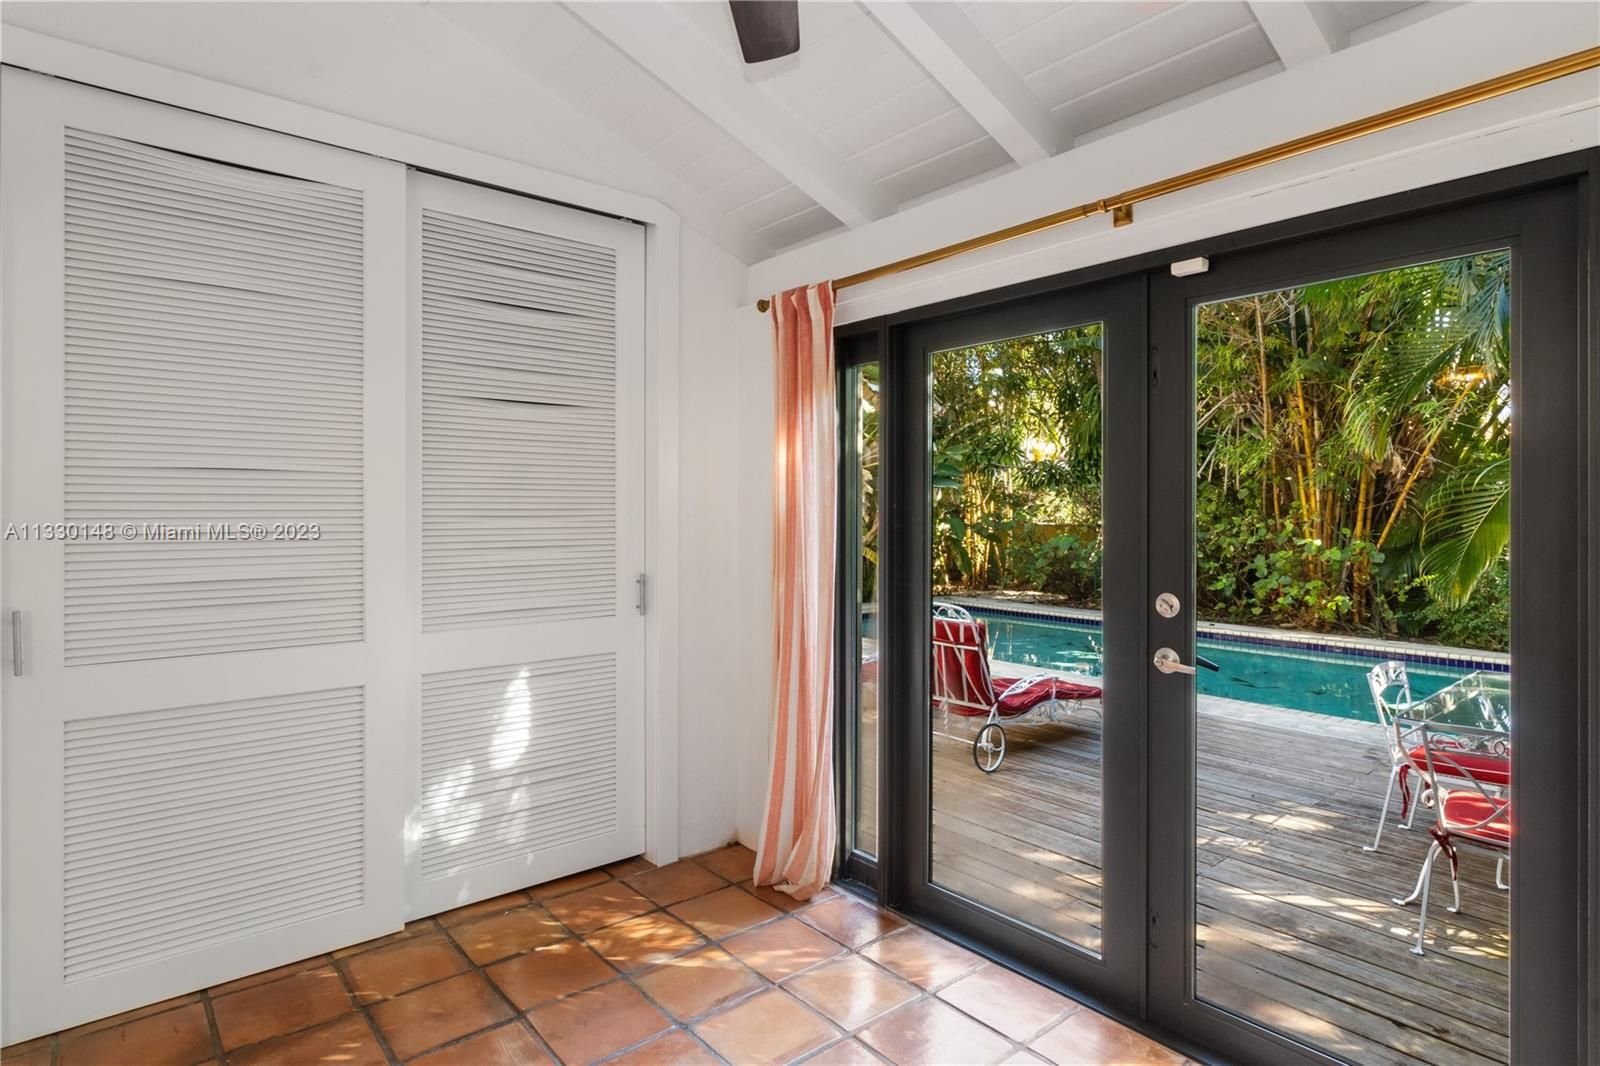 Real estate property located at 4531 Sheridan Ave, Miami-Dade County, Miami Beach, FL